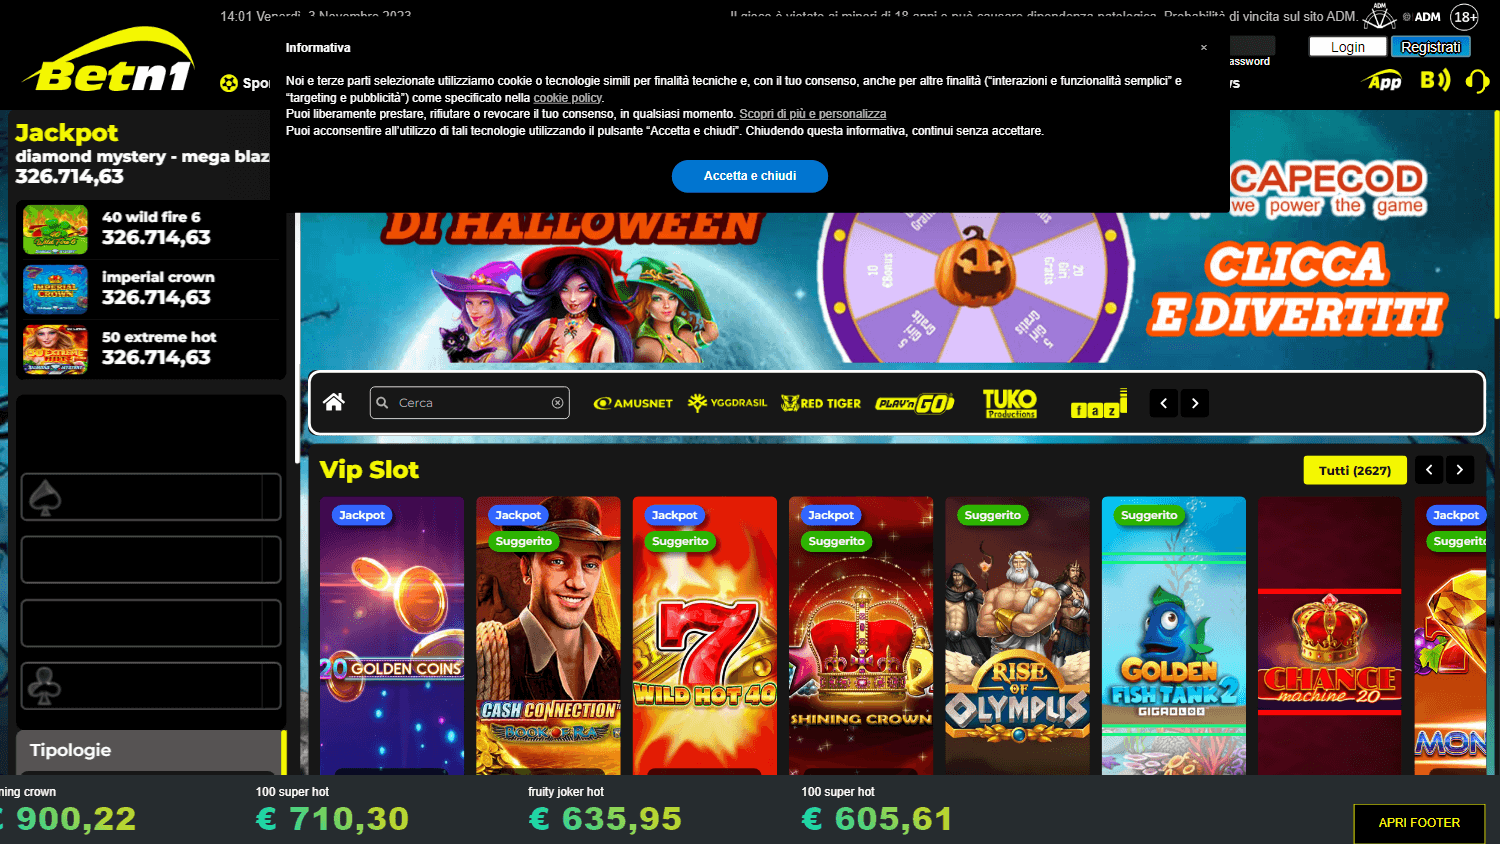 betn1_casino_it_homepage_desktop